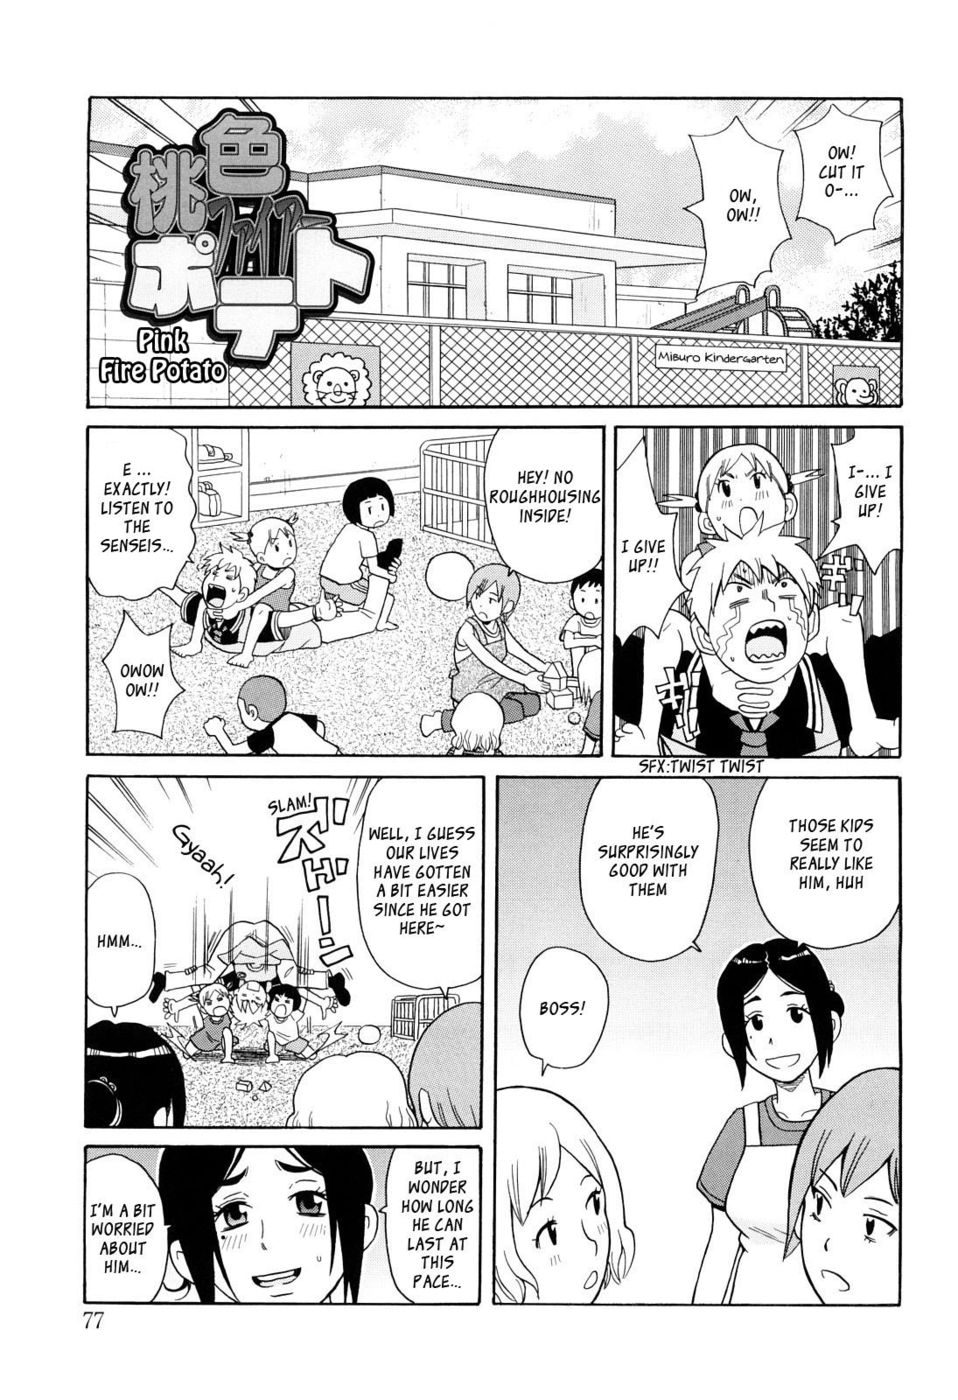 Hentai Manga Comic-Pink Fire Potato-Read-1